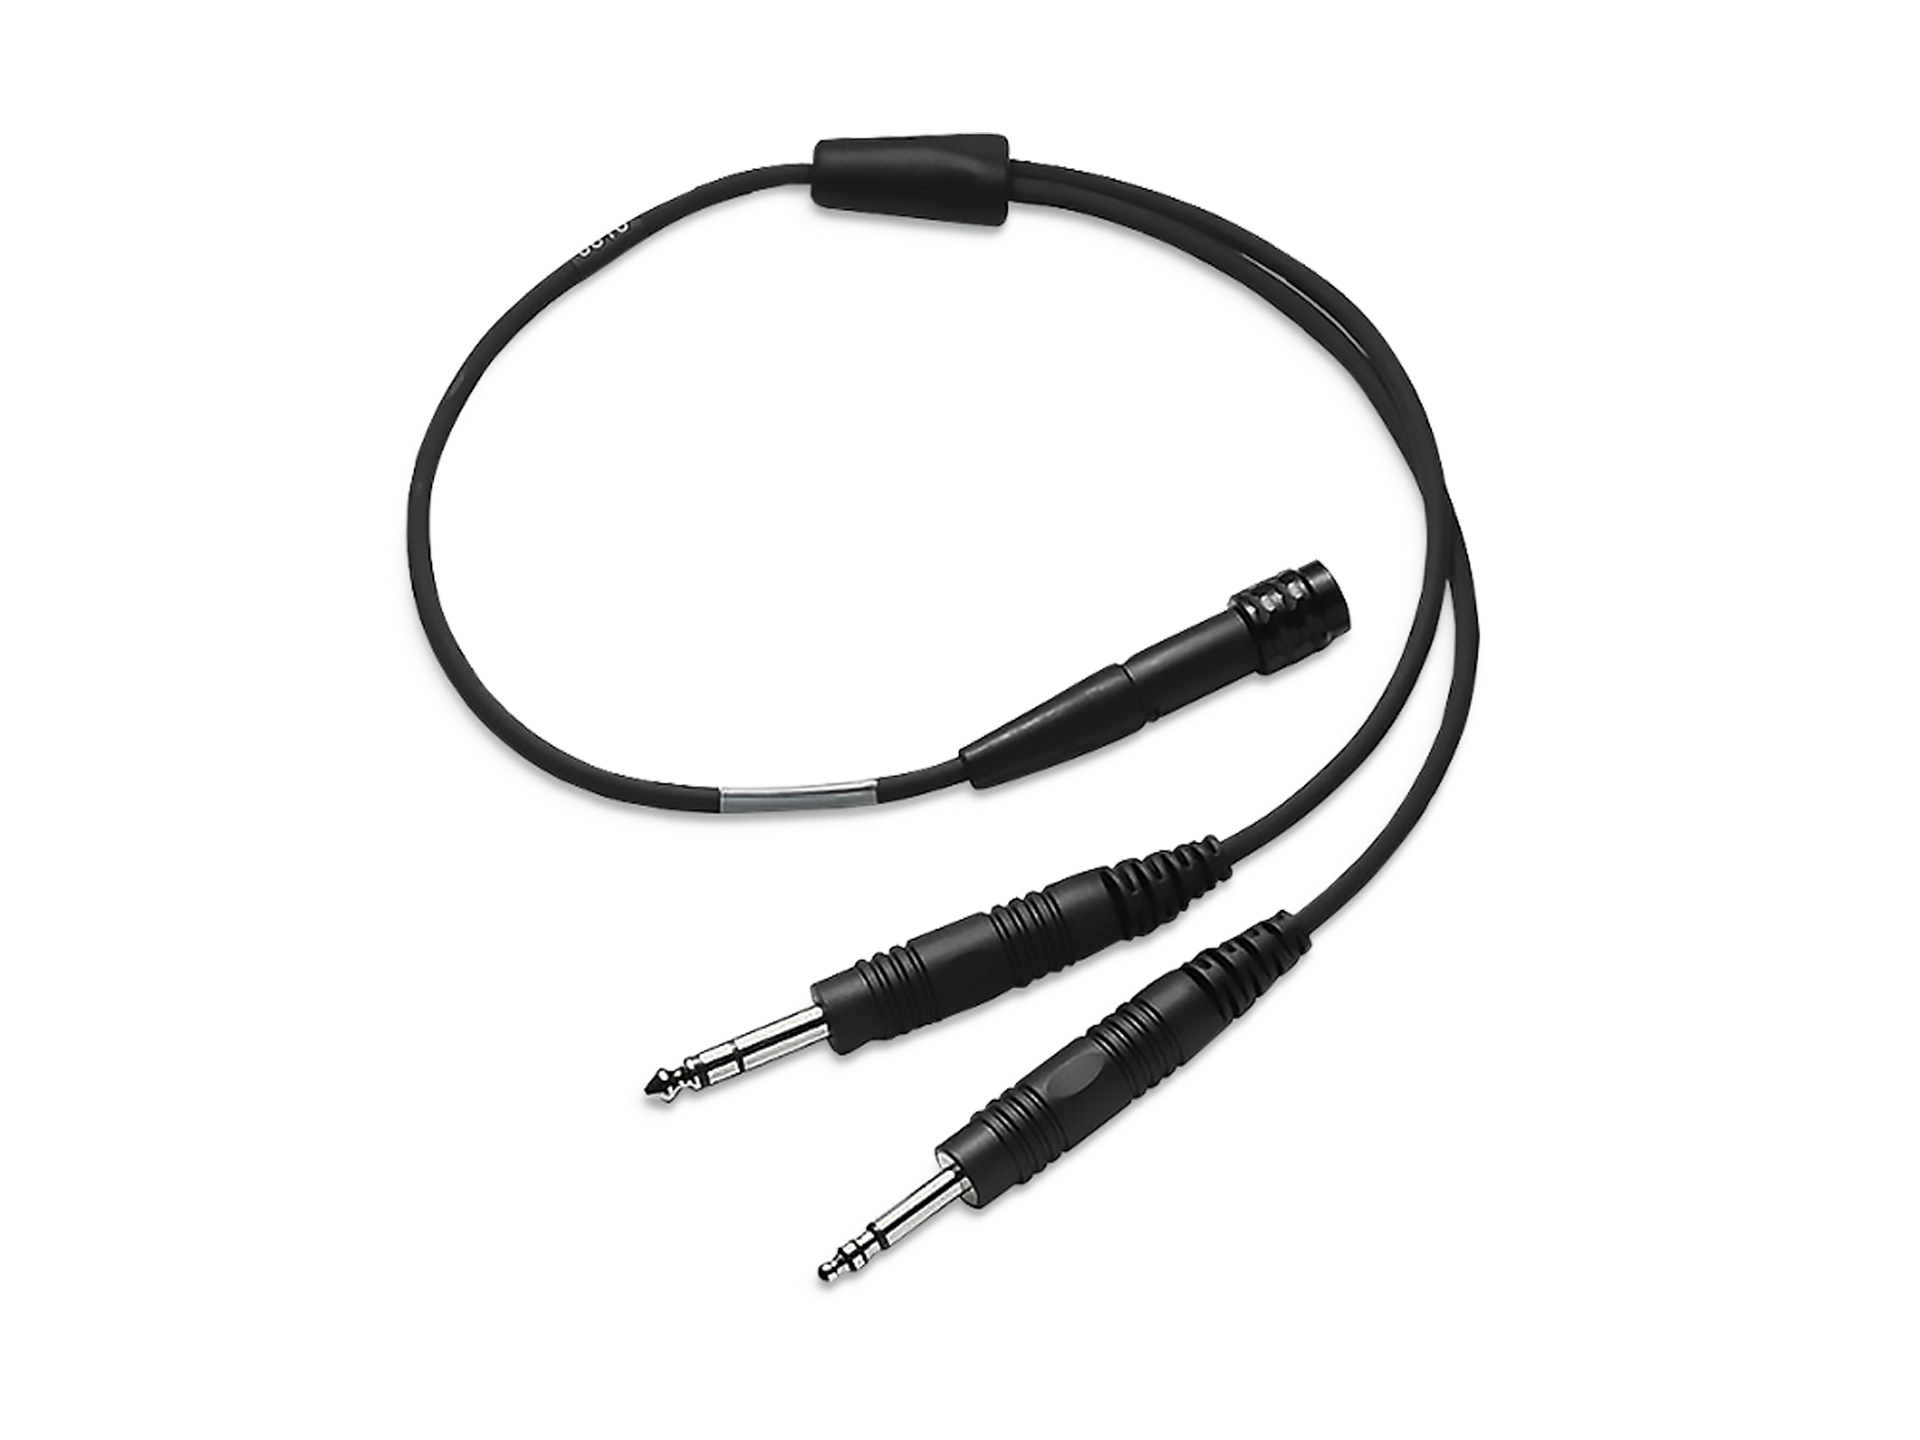 Bose A20 Headset 6-pin to Dual GA Plugs Adapter (327080-0010)